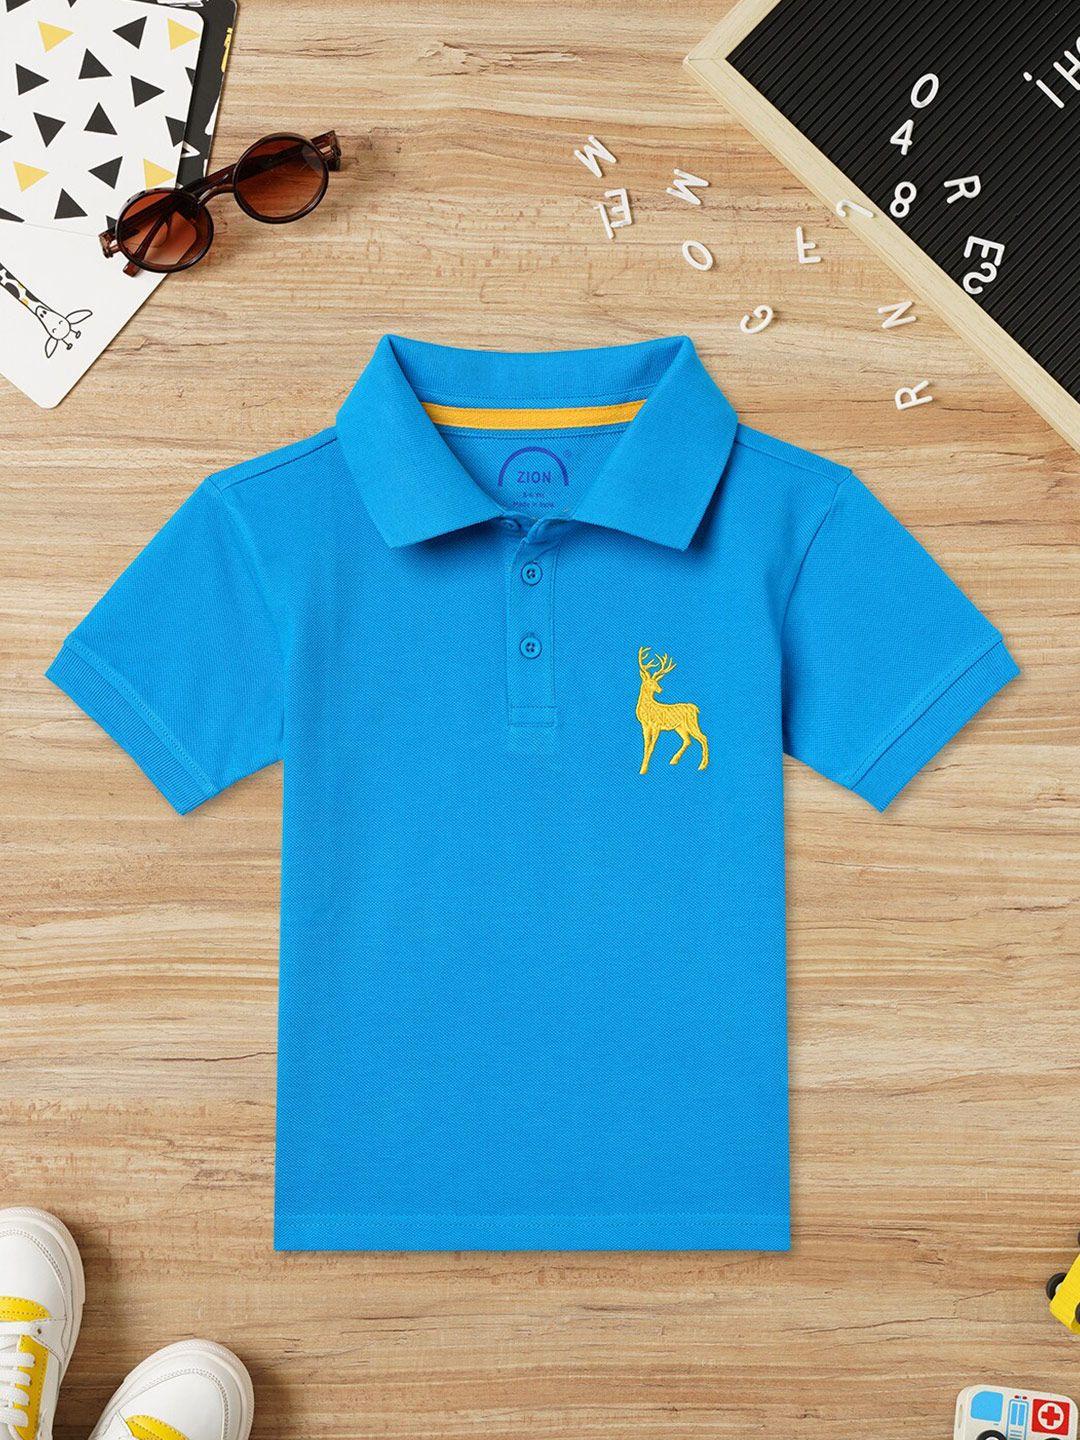 zion-boys-polo-collar-cotton-bio-finish-t-shirt